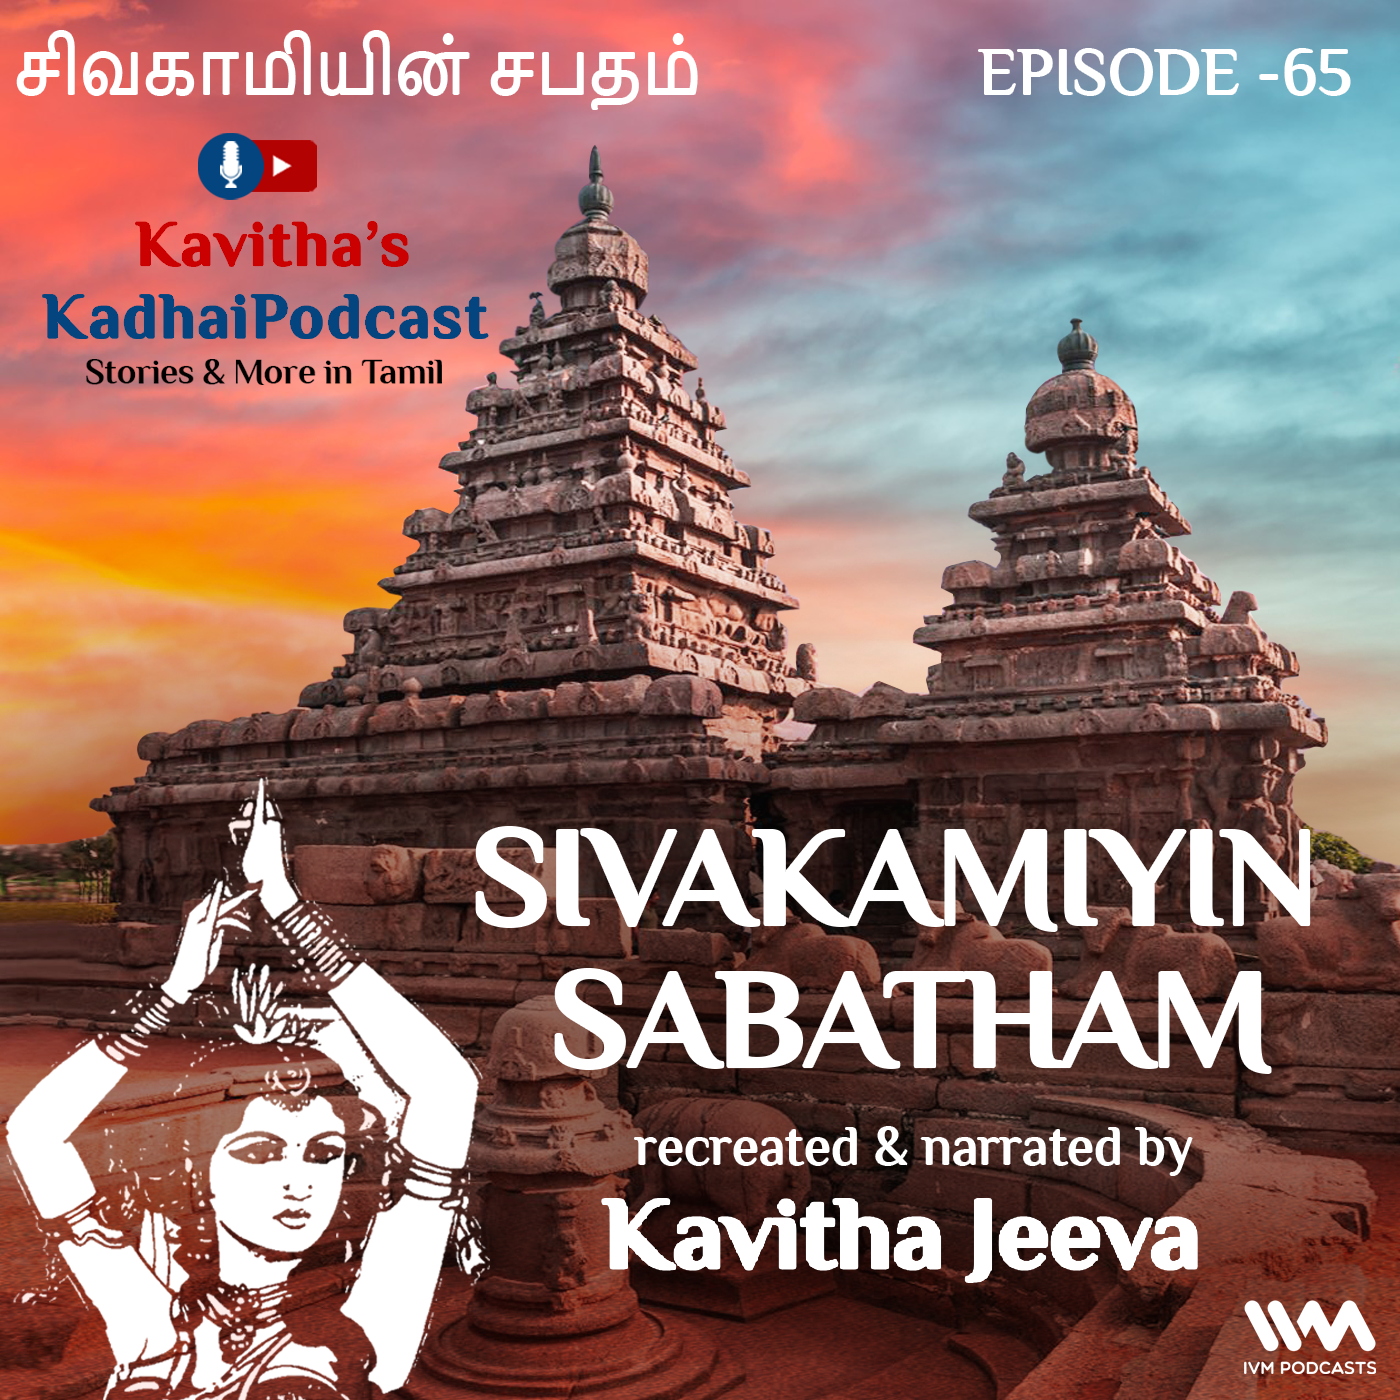 KadhaiPodcast's Sivakamiyin Sabatham - Episode # 65